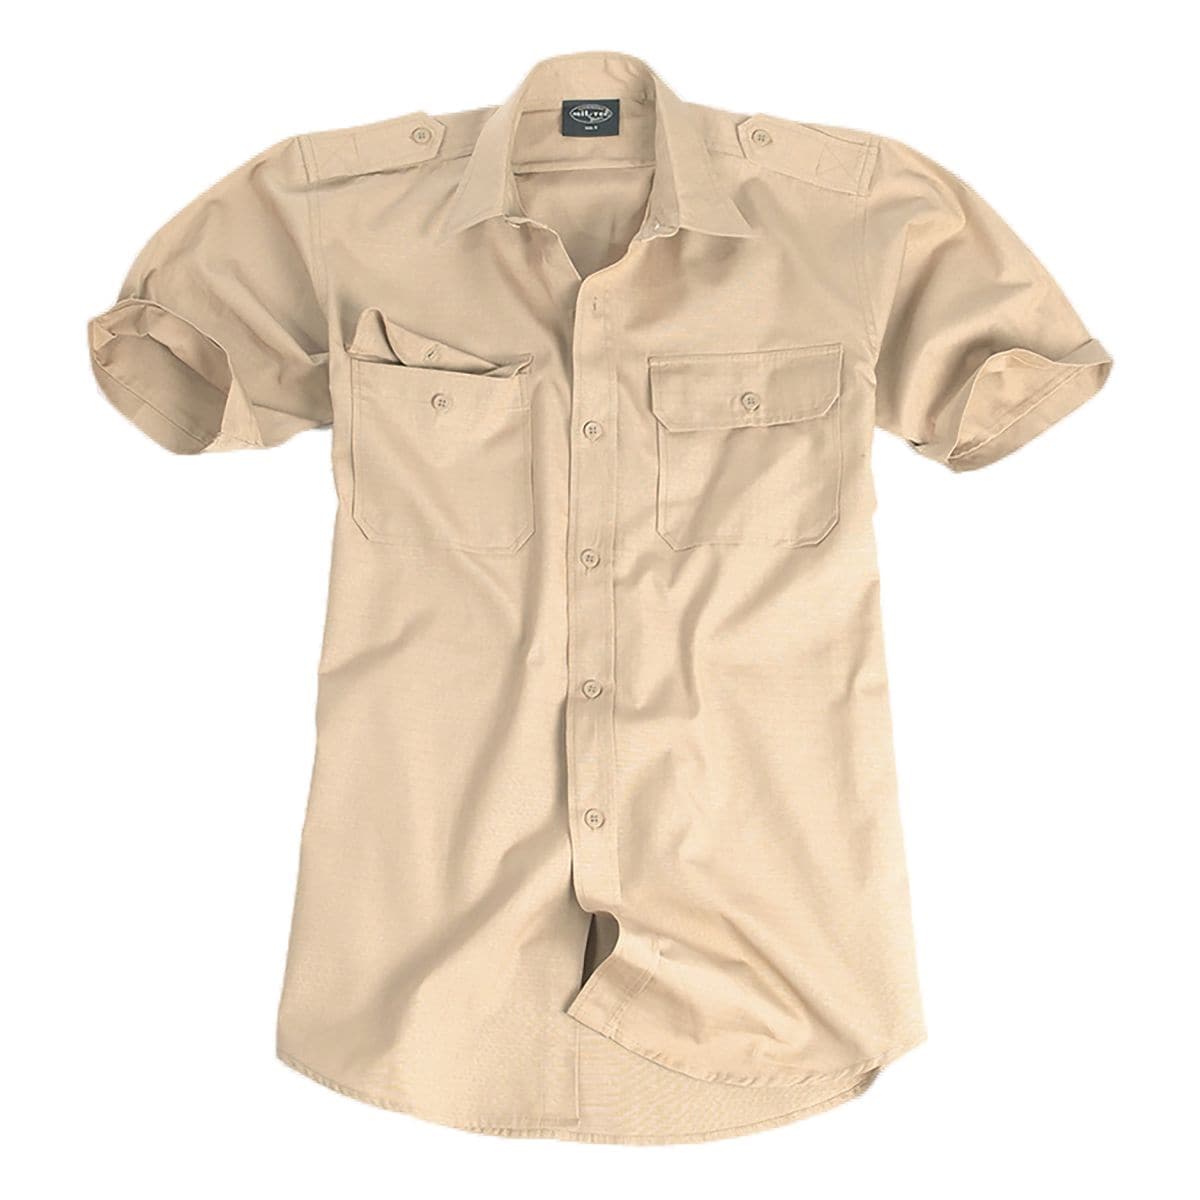 Purchase the Tropical Short Sleeve Shirt khaki by ASMC